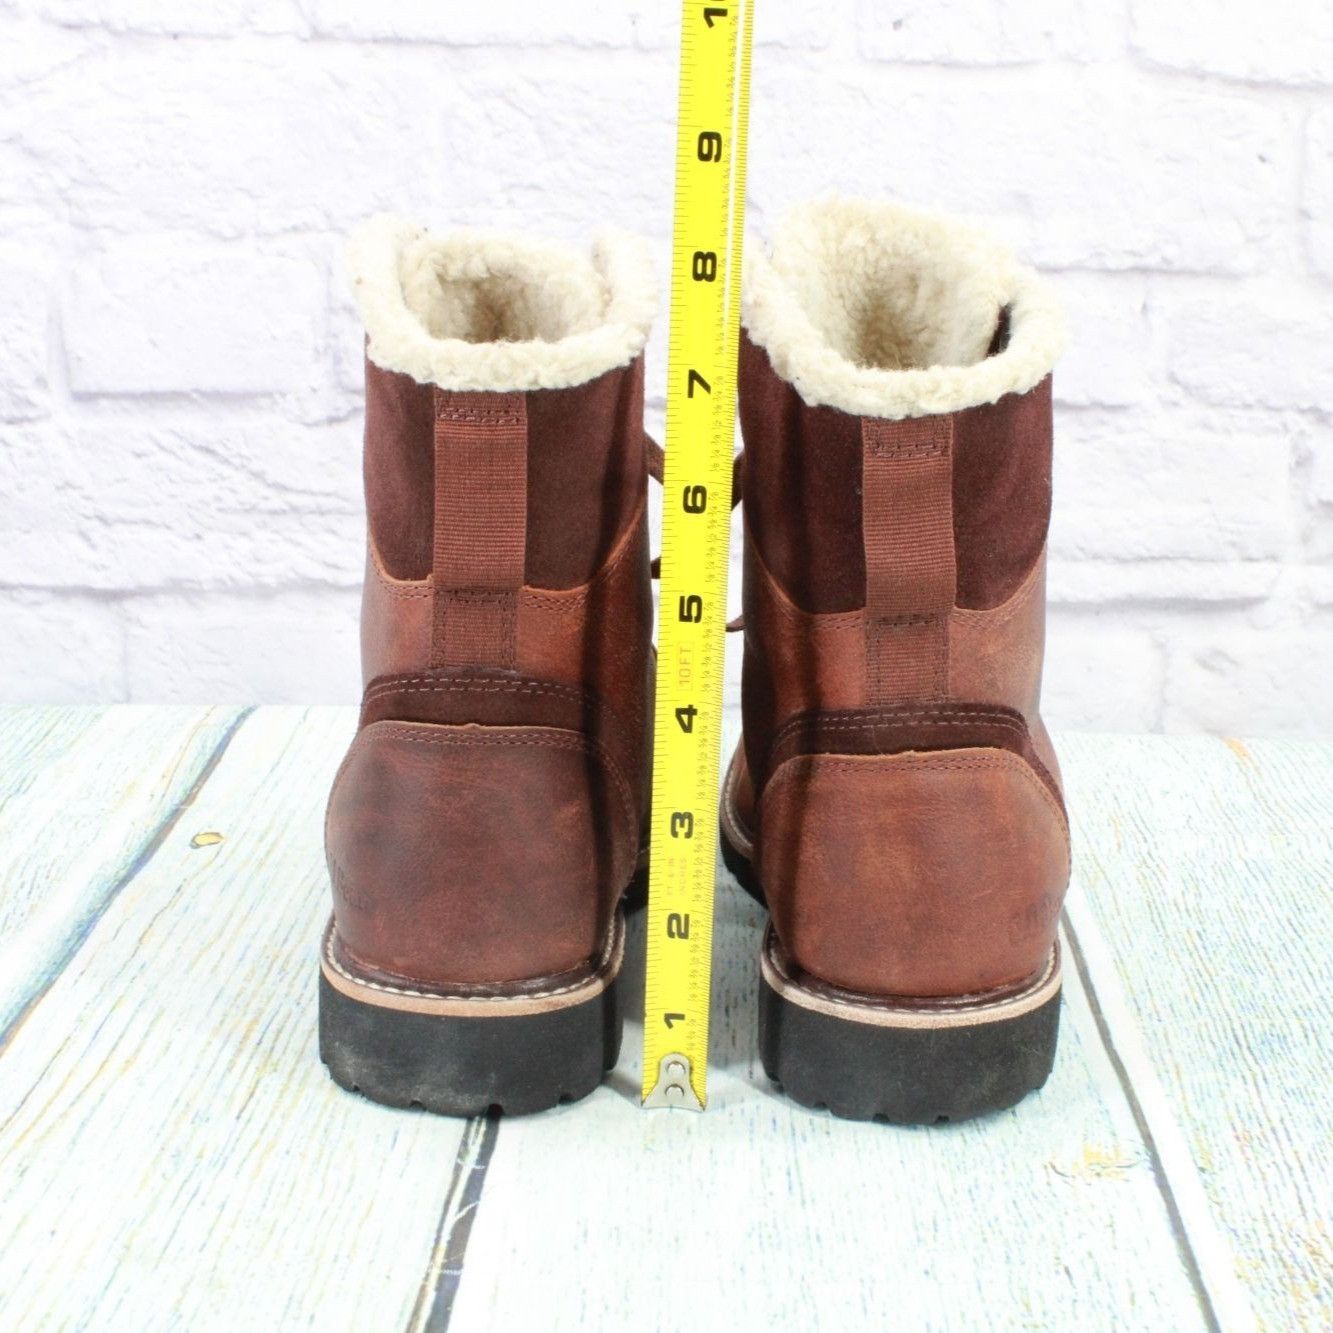 L.L. Bean LL Bean Womens Leather Vibram Sole Fleece Lined Winter Boots Size US 8 / IT 38 - 6 Thumbnail